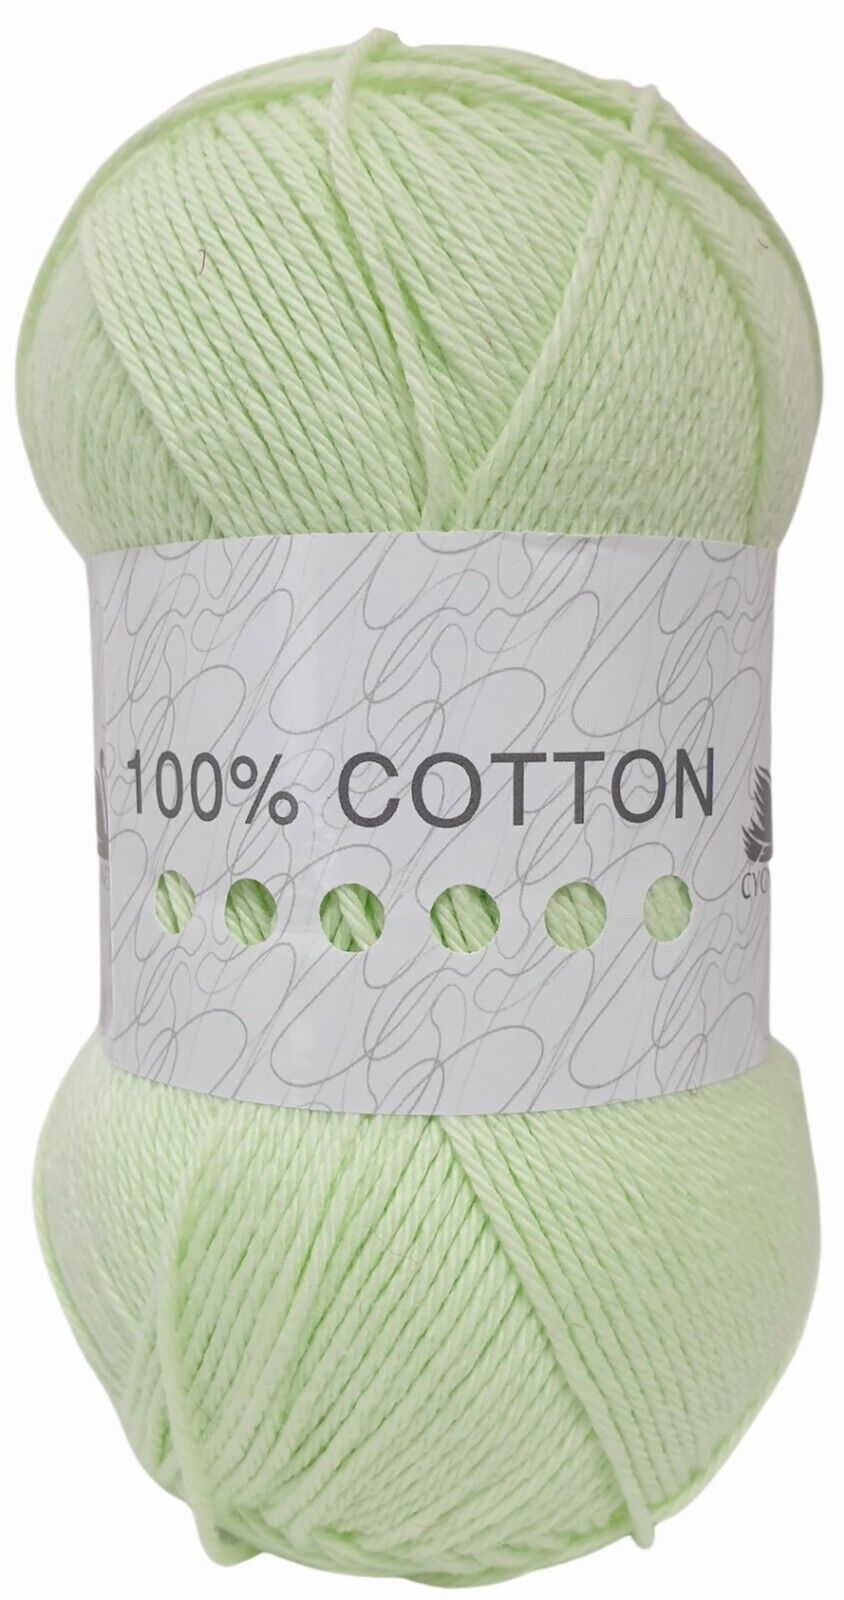 Cygnet 100% COTTON DK Knitting Yarn / Wool - 100g Double Knit Ball - Pistachio